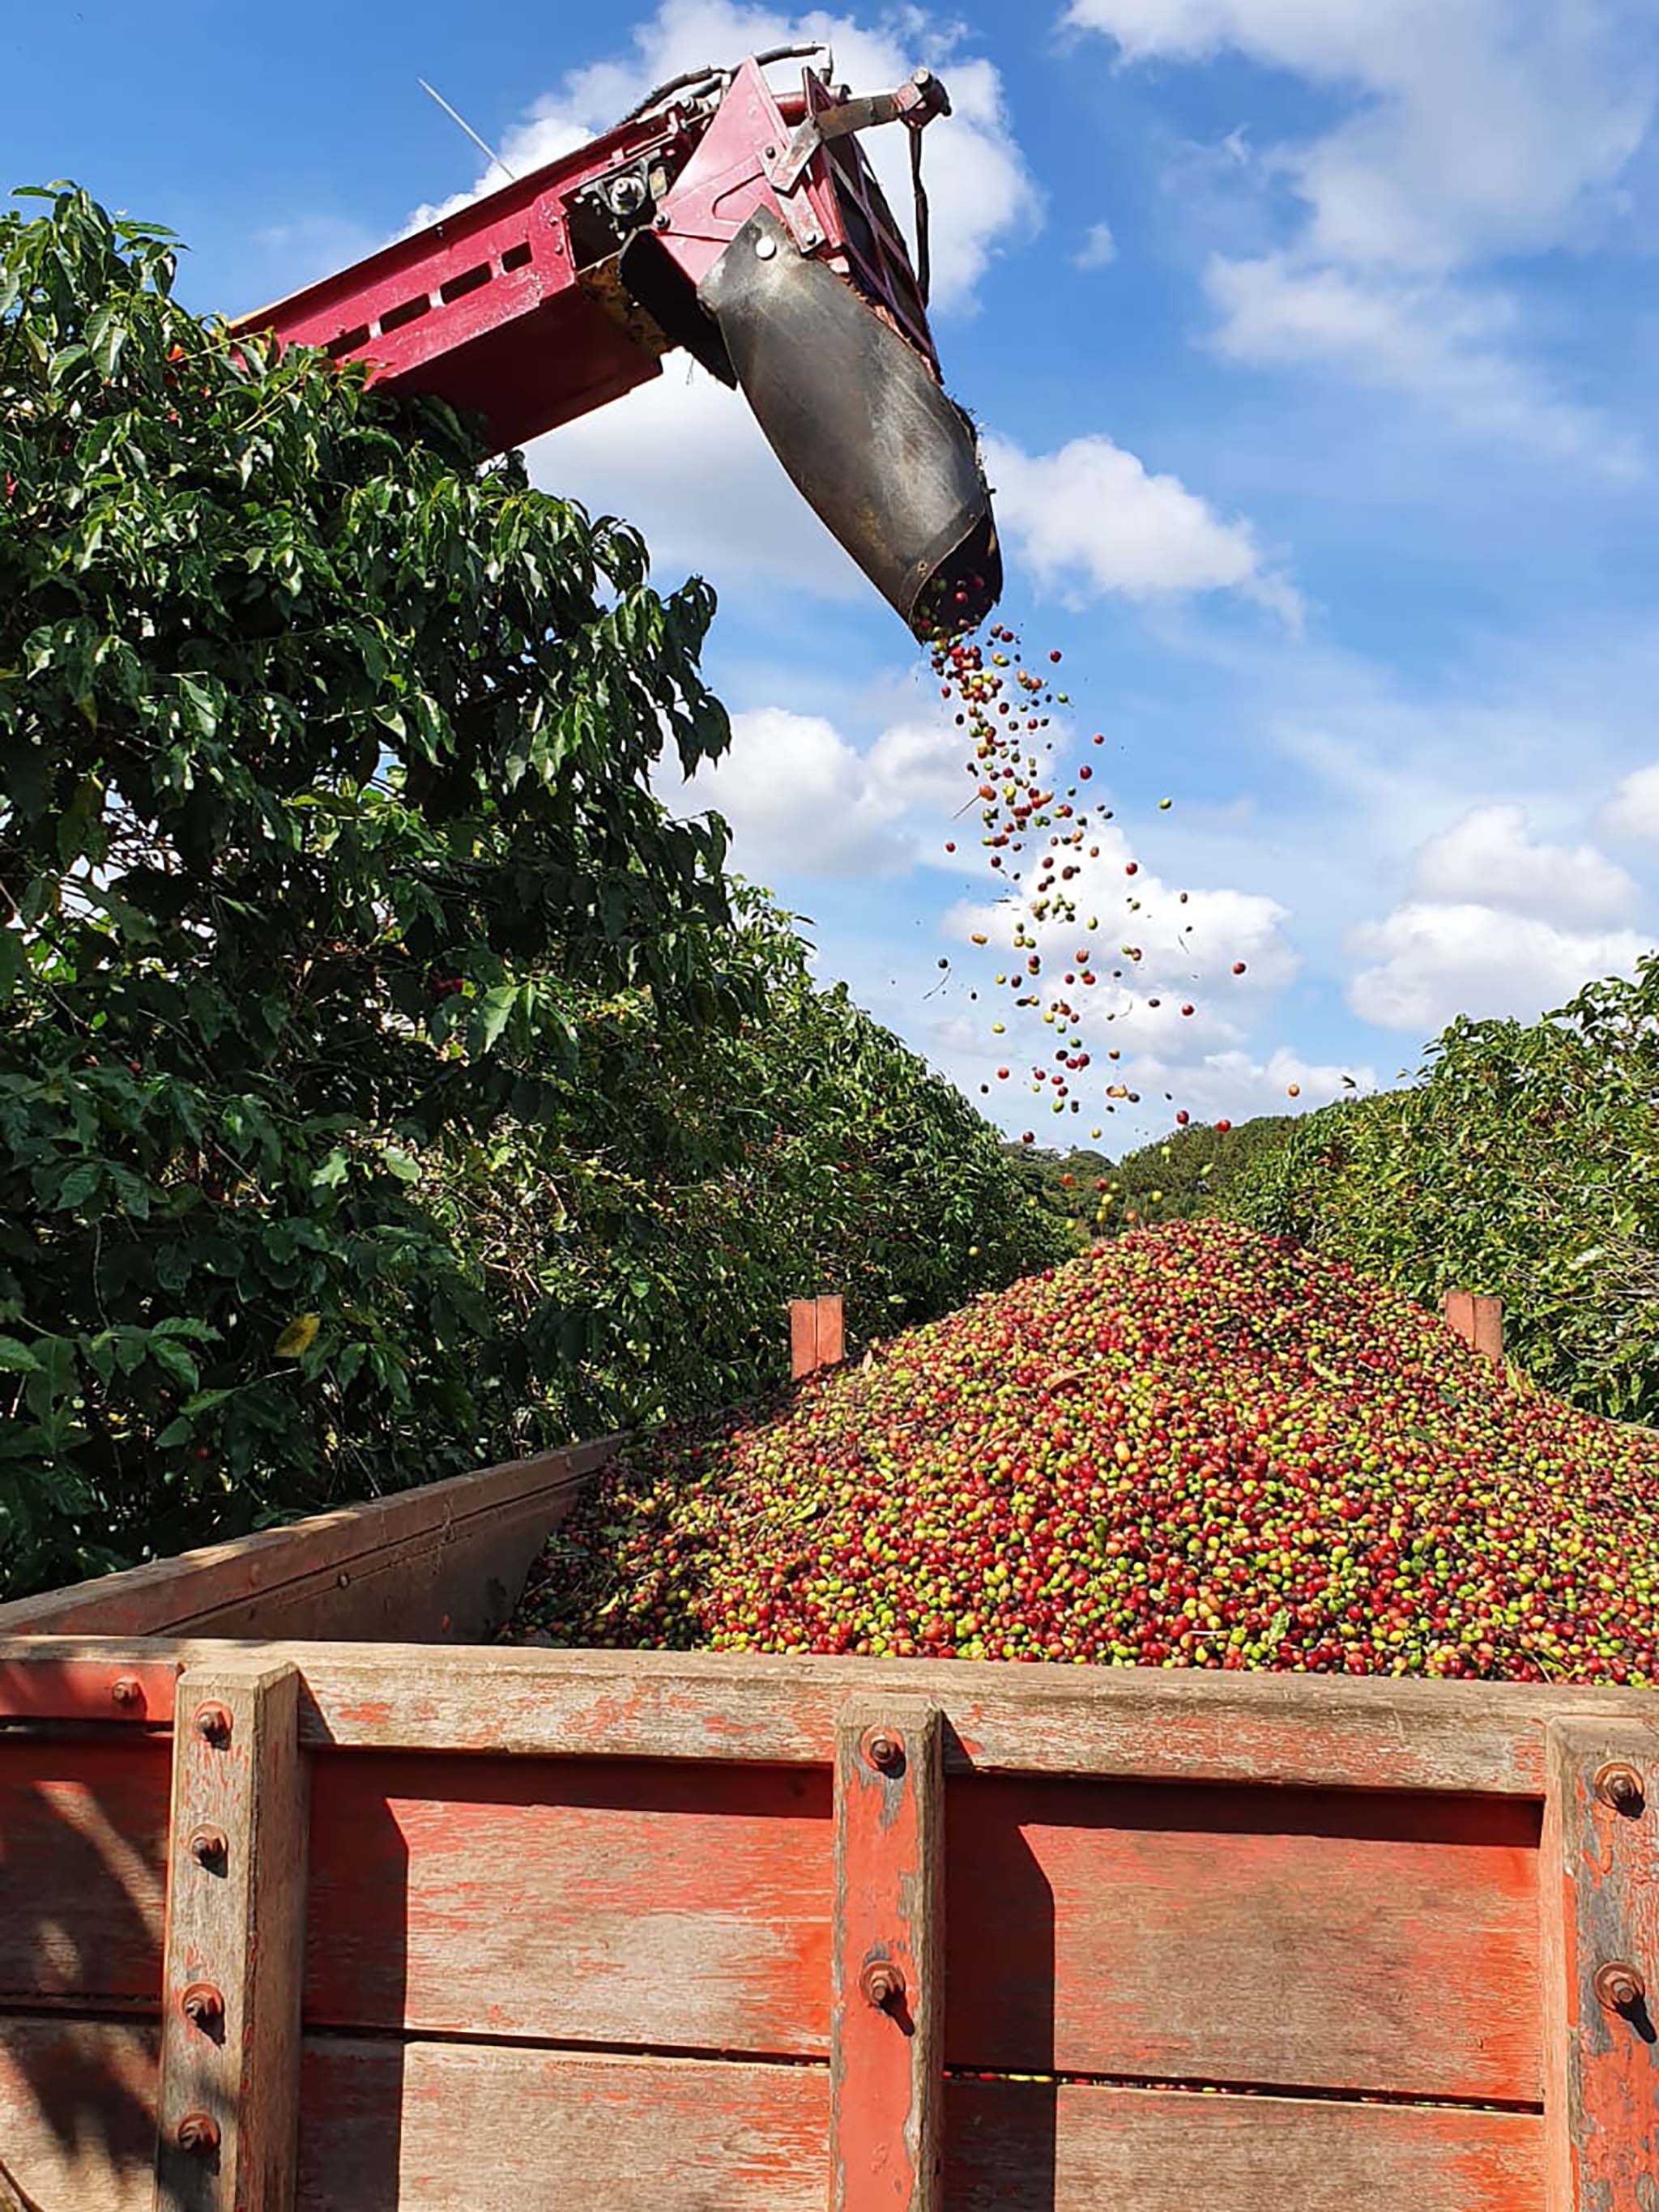 Coffee farm machinery in Brazil